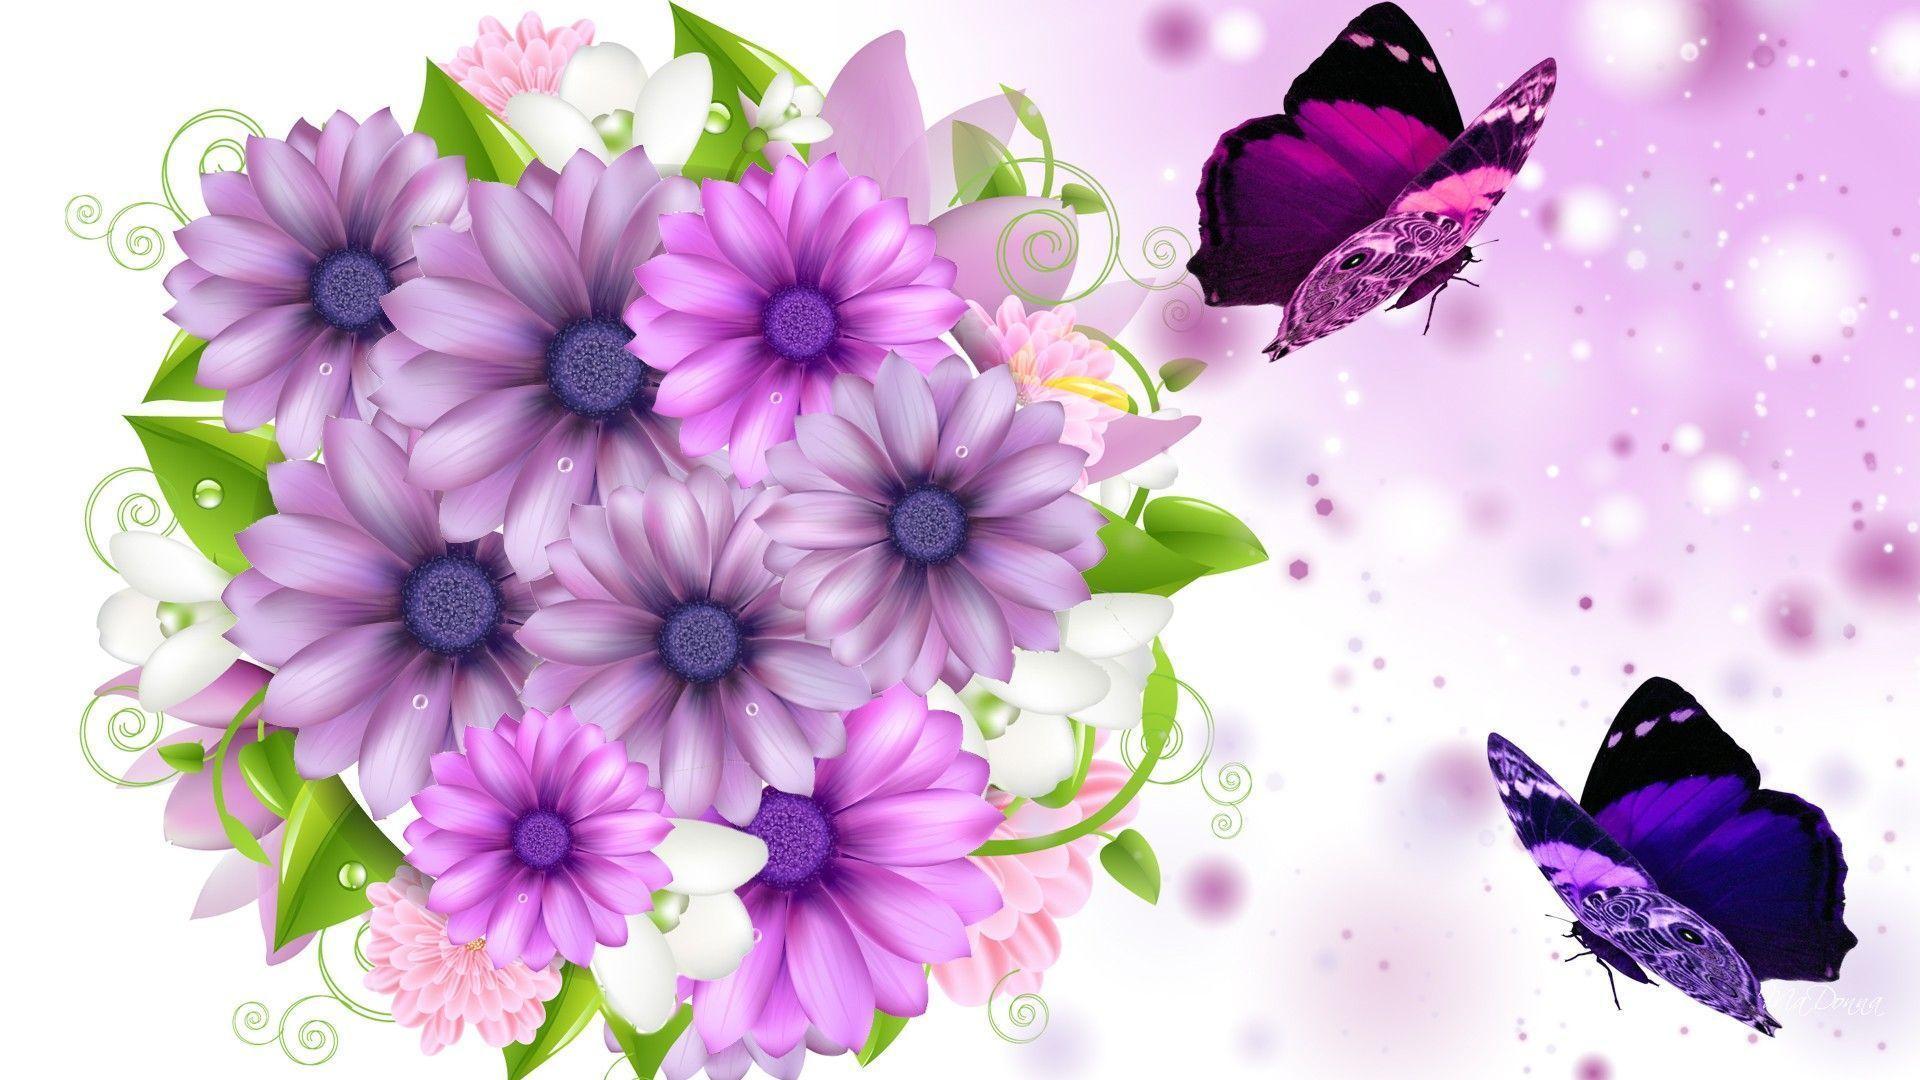 Wallpaper For > Spring Flowers And Butterflies Wallpaper